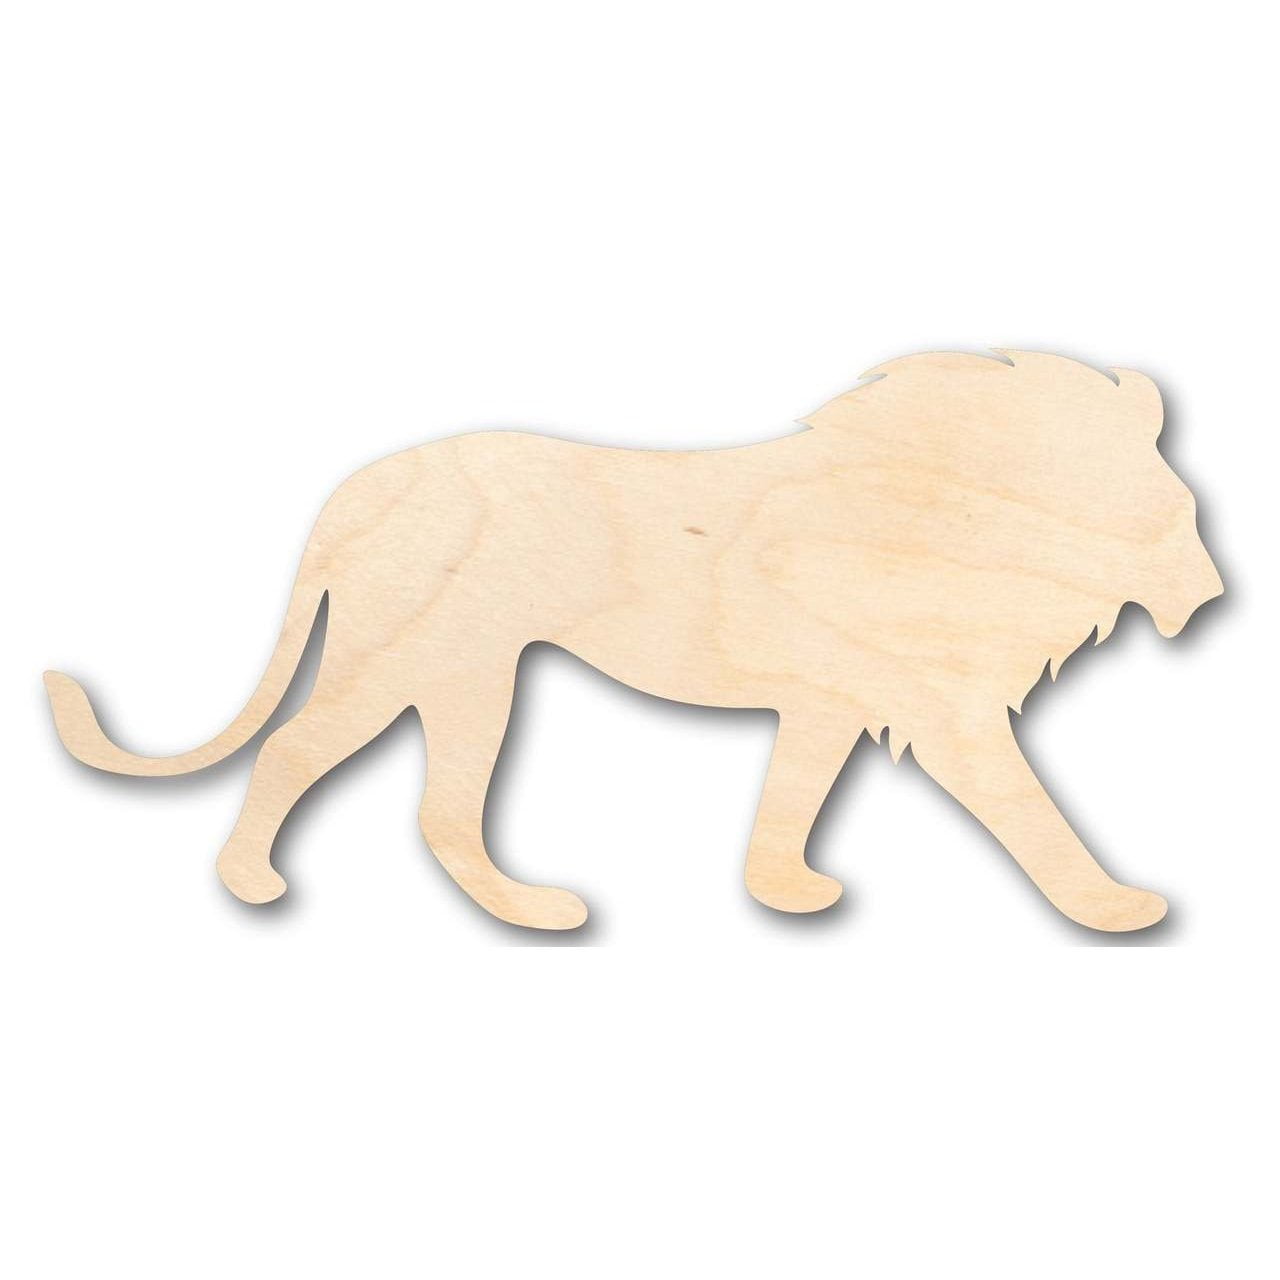 Woodcraft Cutout Lion Laser Cut Out Wood Shape Craft Supply